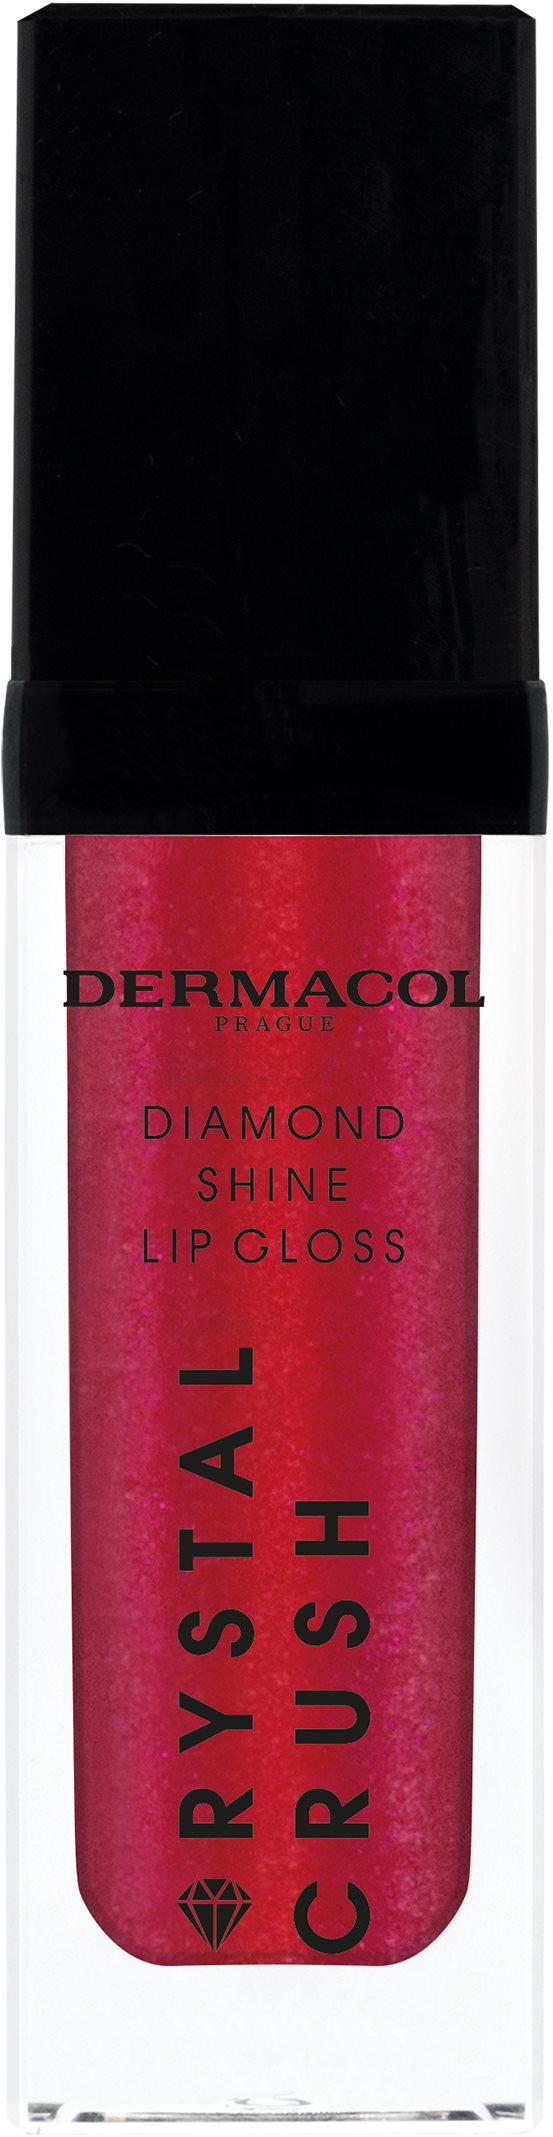 DERMACOL Crystal Crush Diamond Shine Lip Gloss No.03